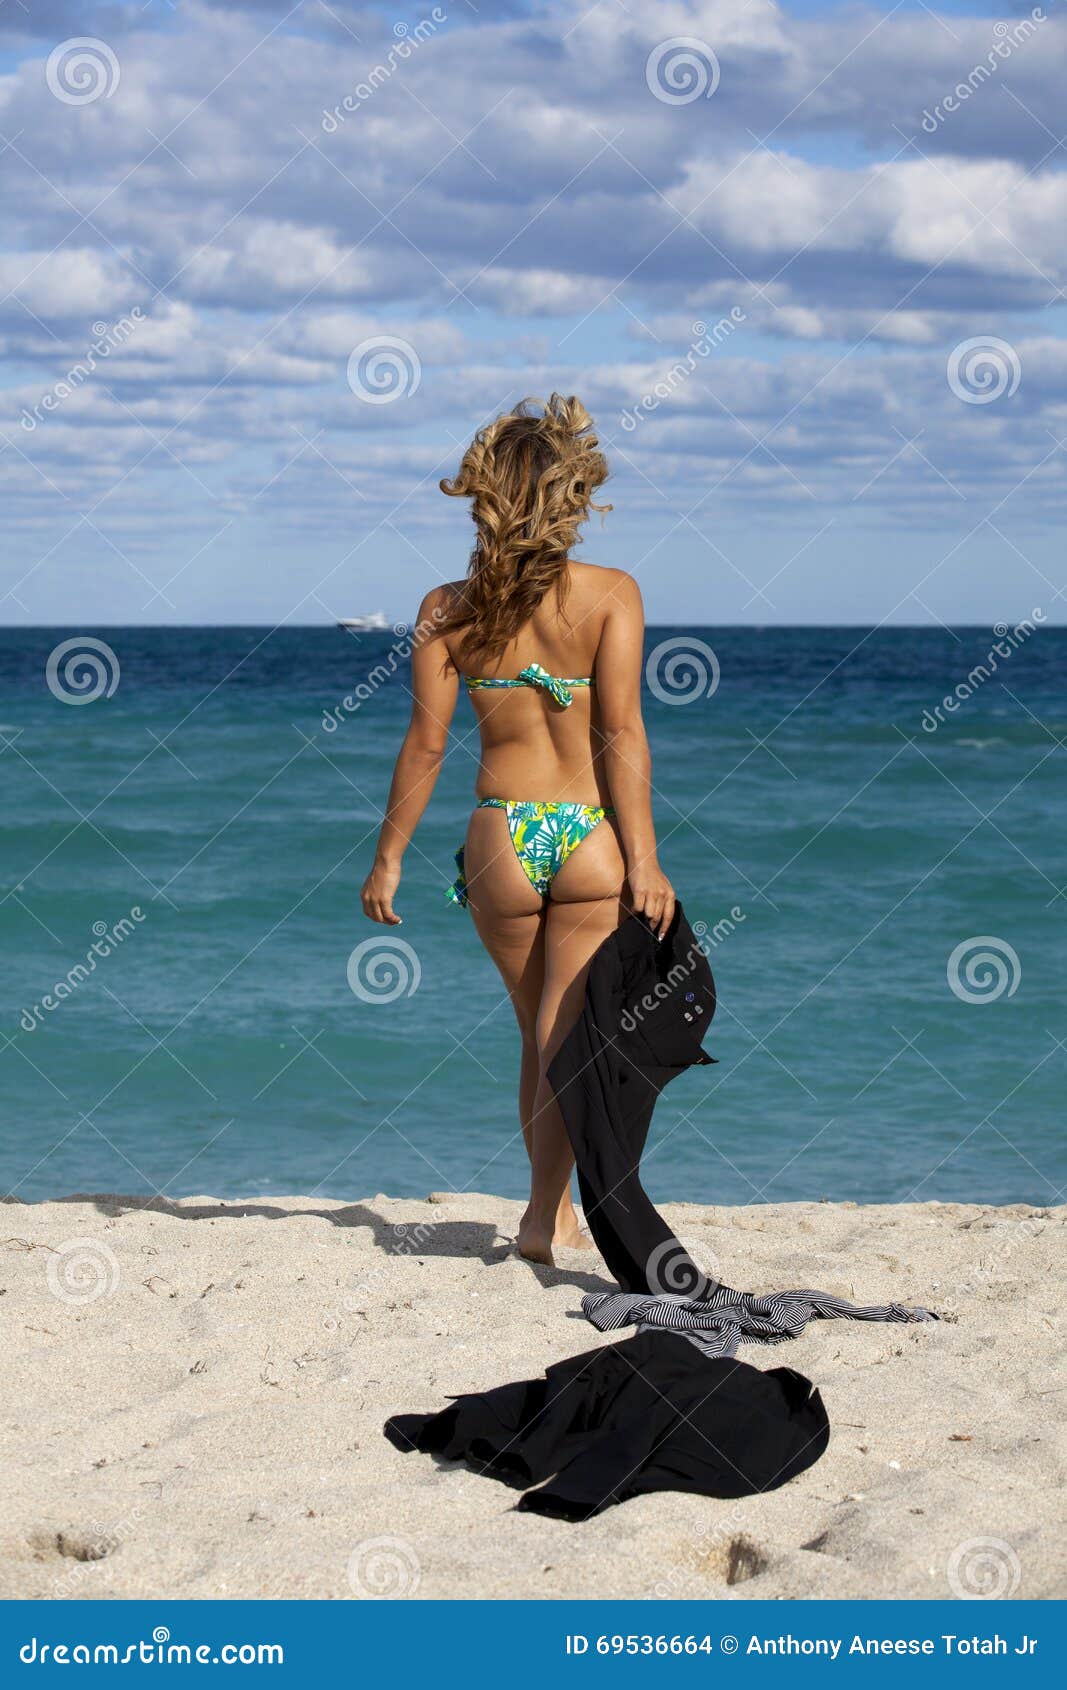 153 Woman Removing Bikini Stock Photos - Free & Royalty-Free Stock Photos  from Dreamstime